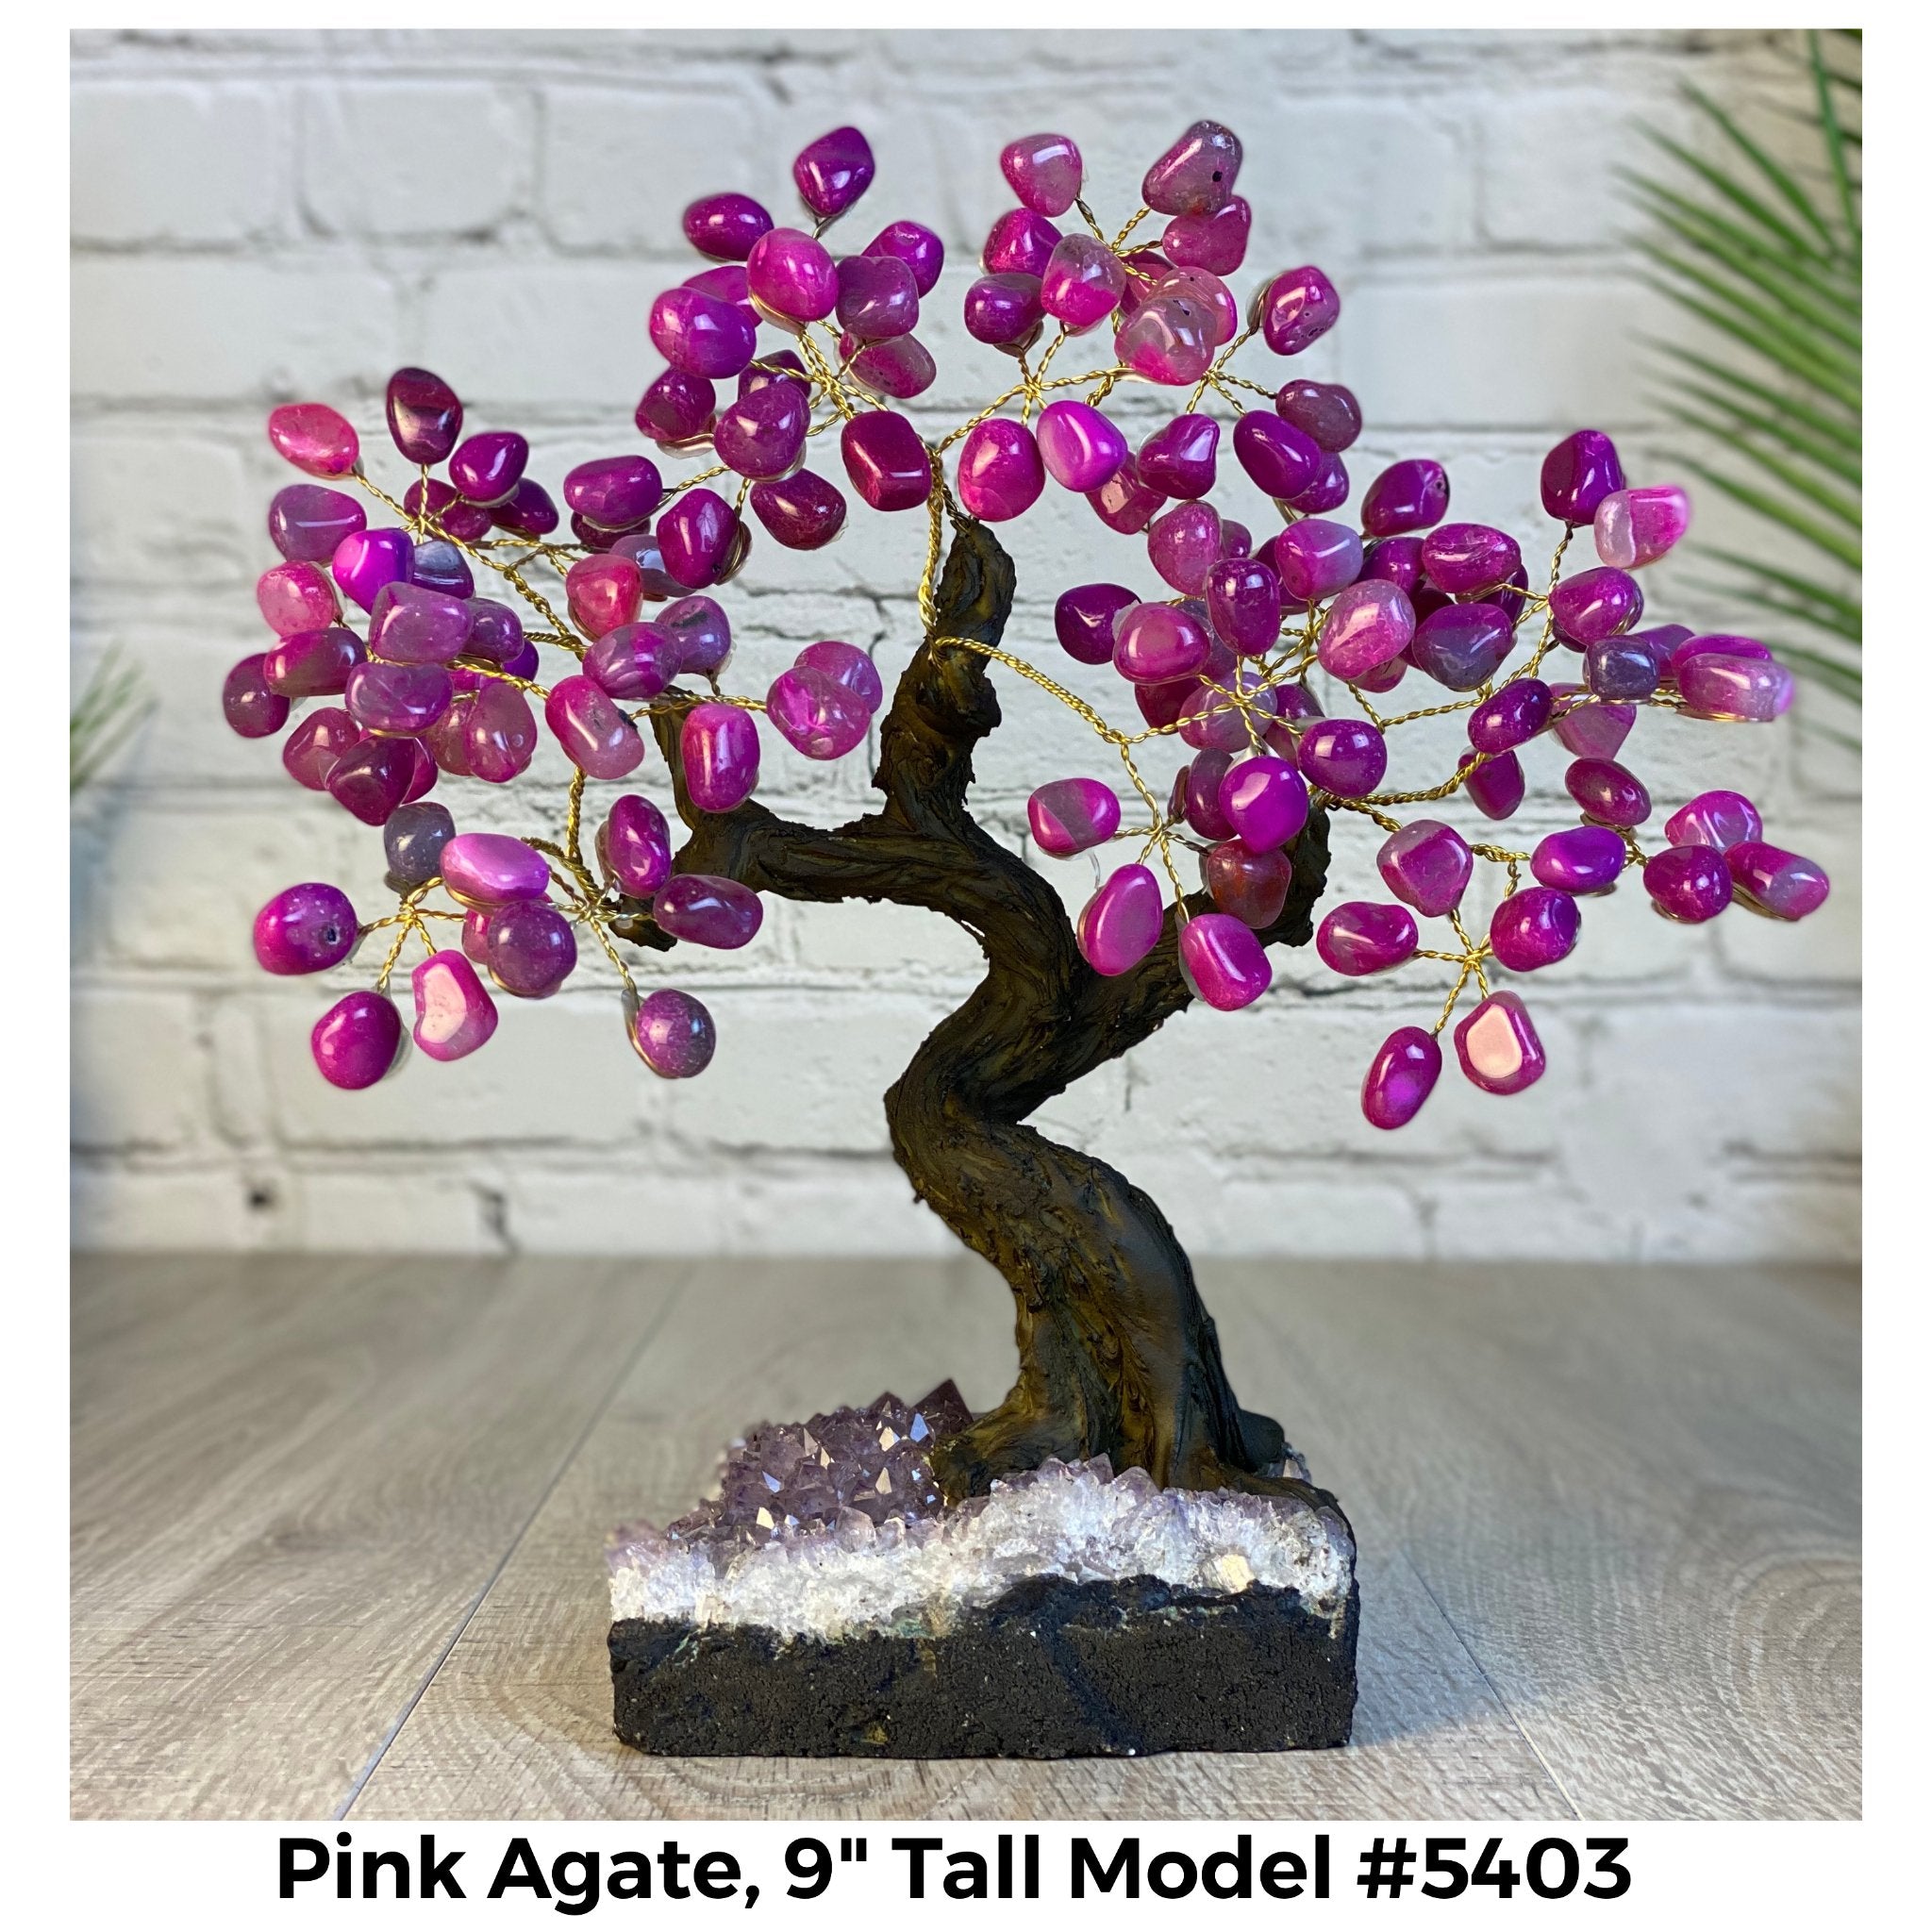 Pink Agate 9" Tall Handmade Gemstone Tree on a Crystal base, 120 Gems #5403PNKA - Brazil GemsBrazil GemsPink Agate 9" Tall Handmade Gemstone Tree on a Crystal base, 120 Gems #5403PNKAGemstone Trees5403PNKA